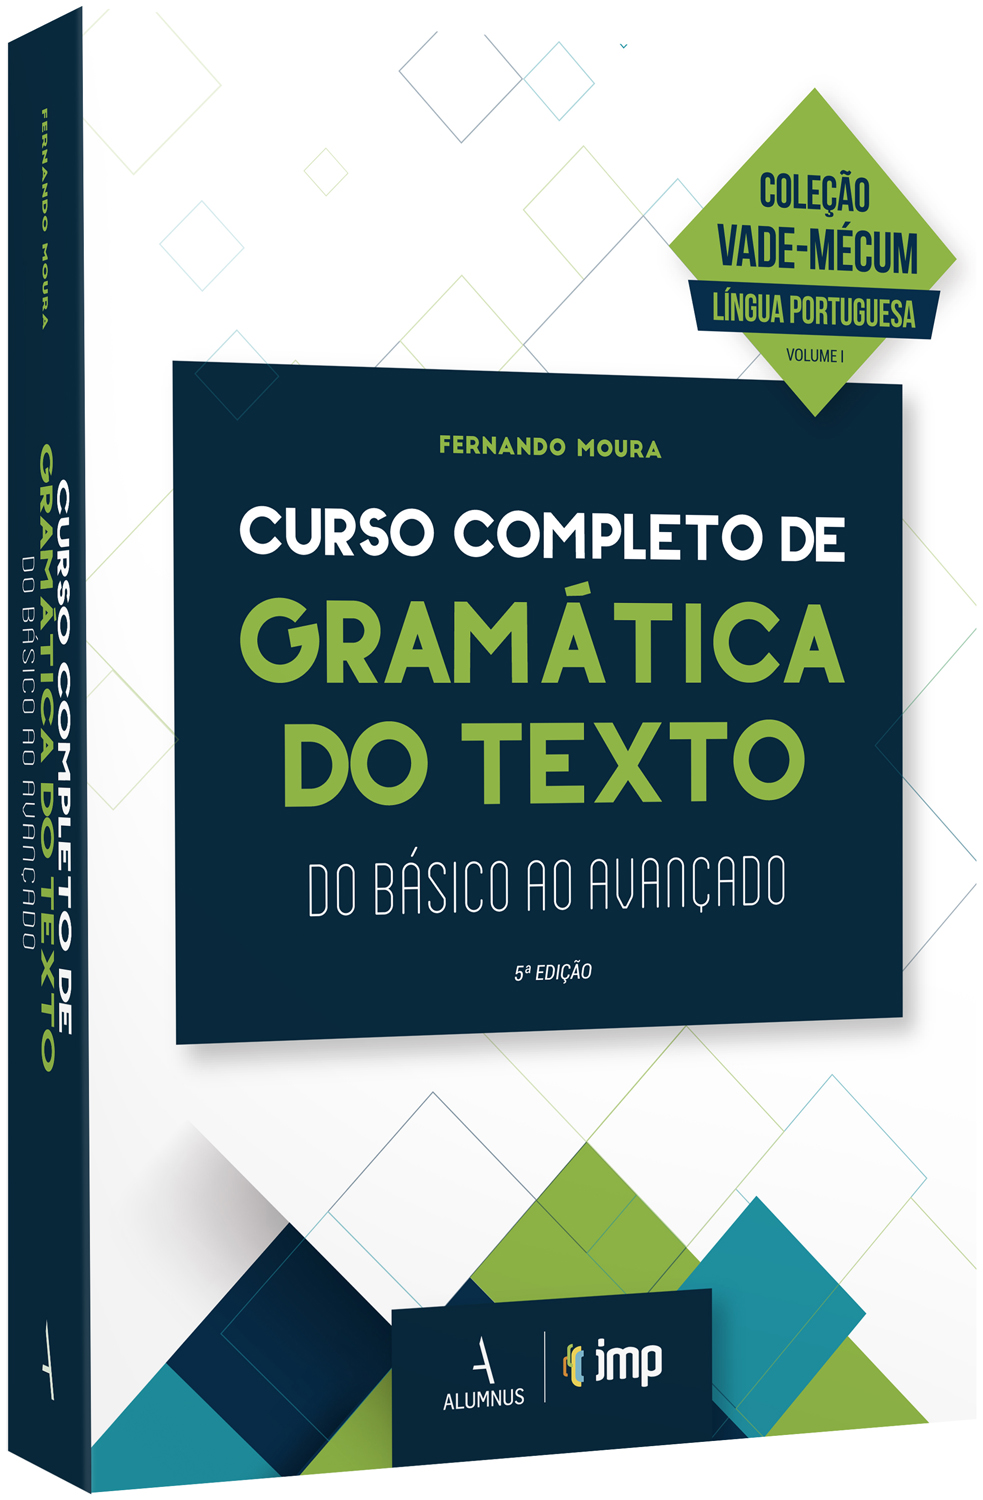 Novíssimo Curso de Língua Portuguesa.indd - Gravo Papers